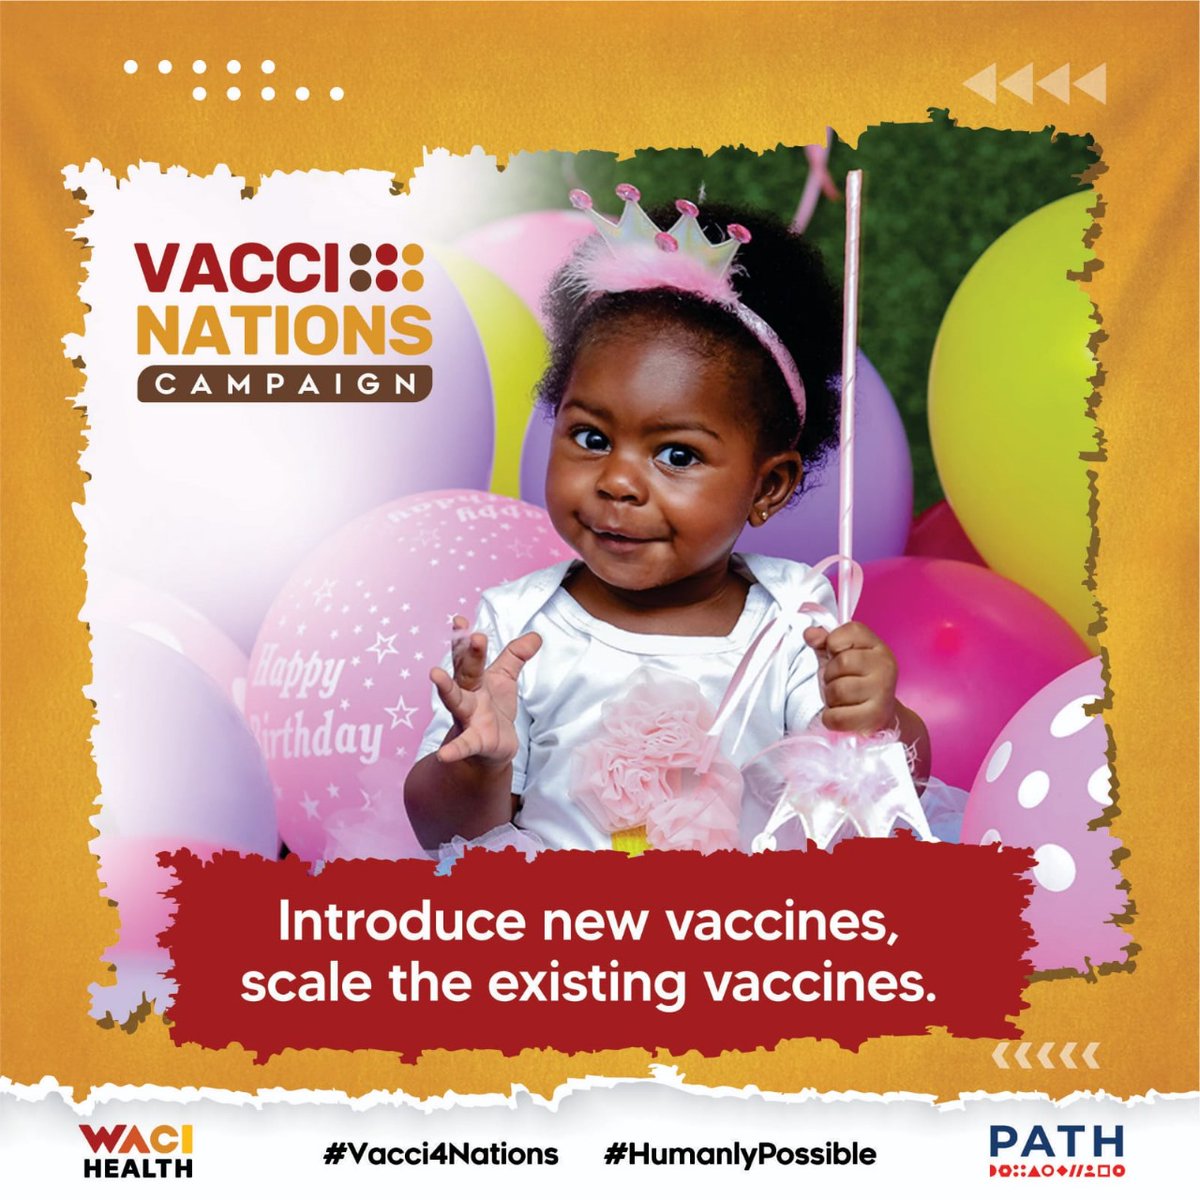 @path @PATHadvocacy @gavi @MTotoNews @WACIHealth @Gloriamululu @WanjikuMerci @QueerSpacKe @ItsKyuleNgao @SaraKe_biya @its_qario @mariahakinyi11 @Shis1Shisia @gavi_csos @jngangaaa Every child deserves access to life-saving vaccines, regardless of where they live. The webinar will discuss the commitment of 10 African countries to strengthen immunization financing. @gavi_csos @PATH @gavi @MTotoNews #Vacci4Nations #HumanlyPossible #WorldImmunizationWeek